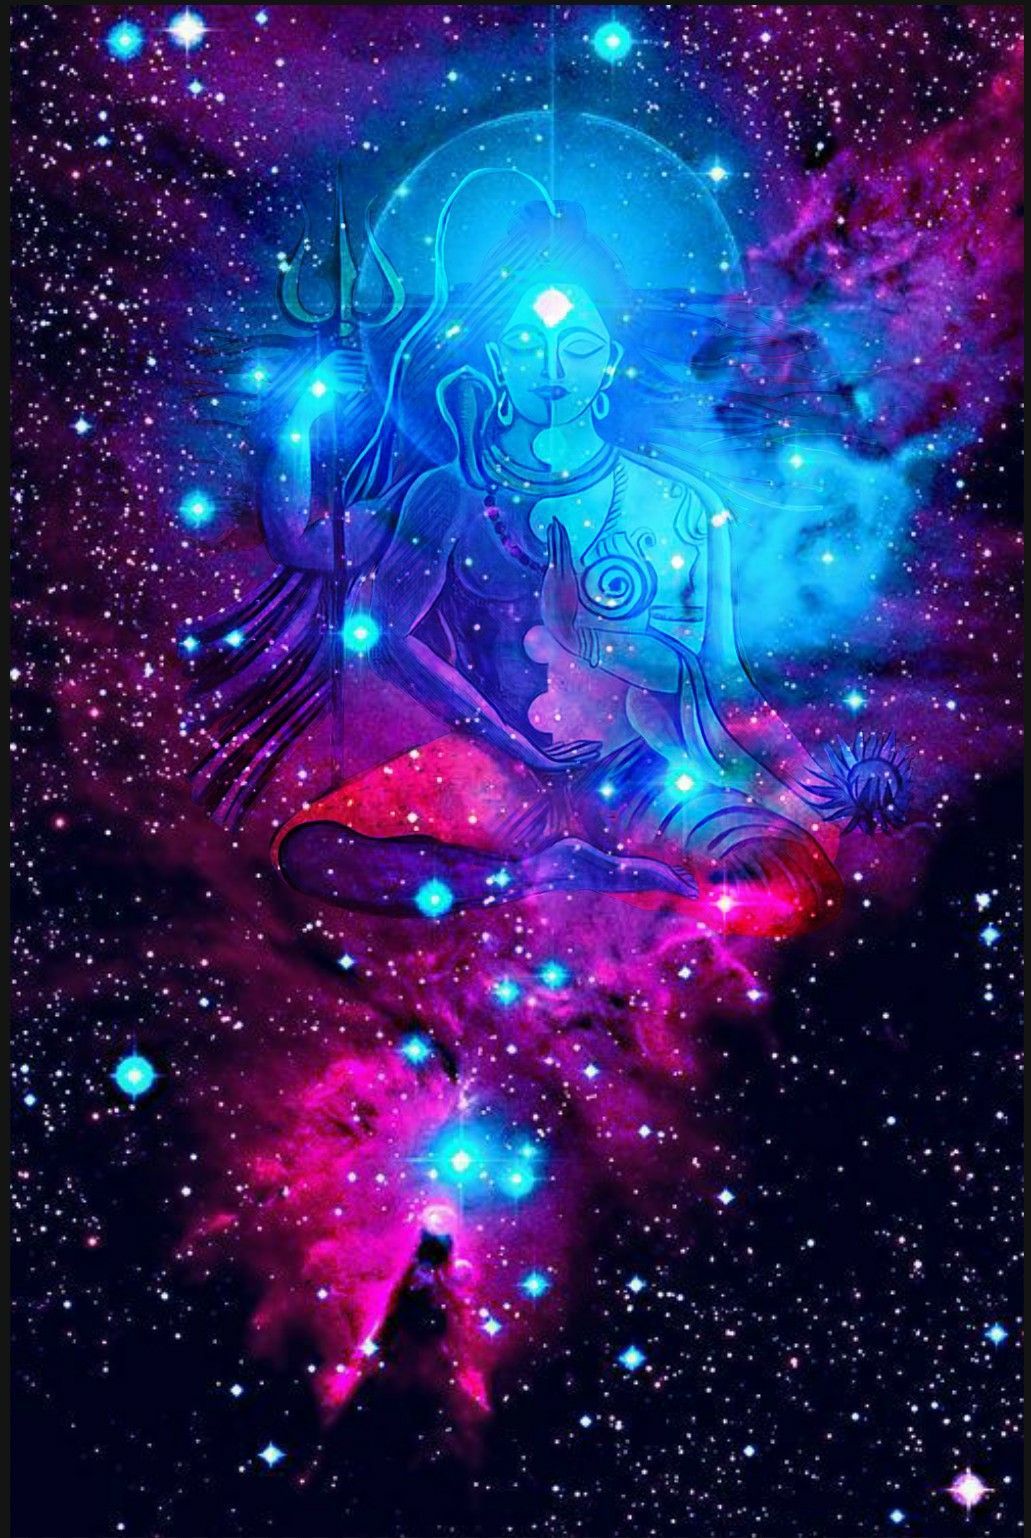 Lord Shiva as ardhnarishwar in Brahmand Galaxy in creative art